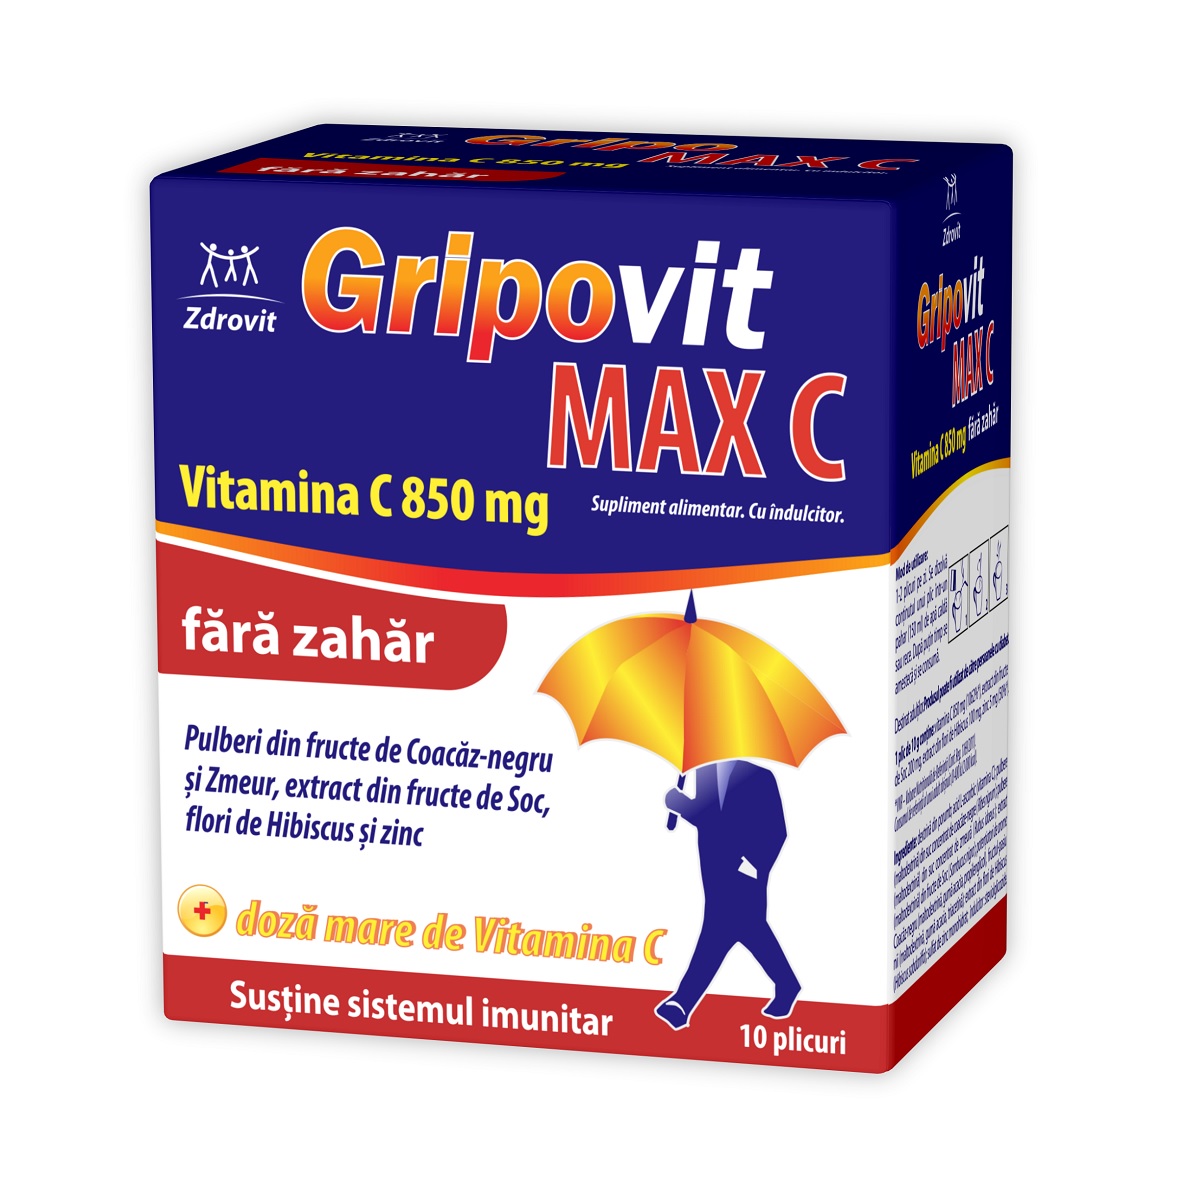 Raceala si gripa - Gripovit Max C fără zahăr, 10 plicuri, Zdrovit, sinapis.ro